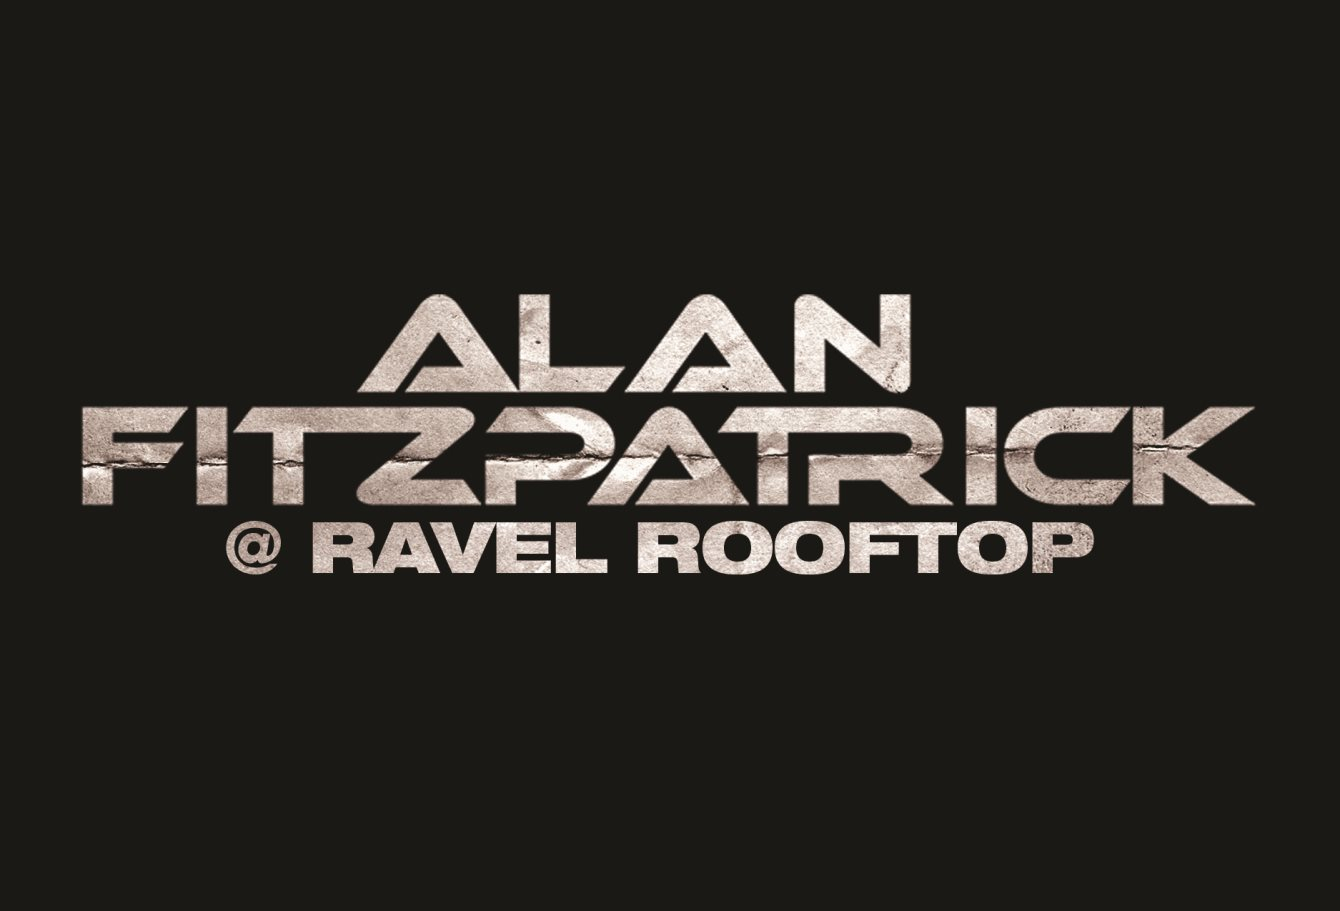 Alan Fitzpatrick - Flyer back